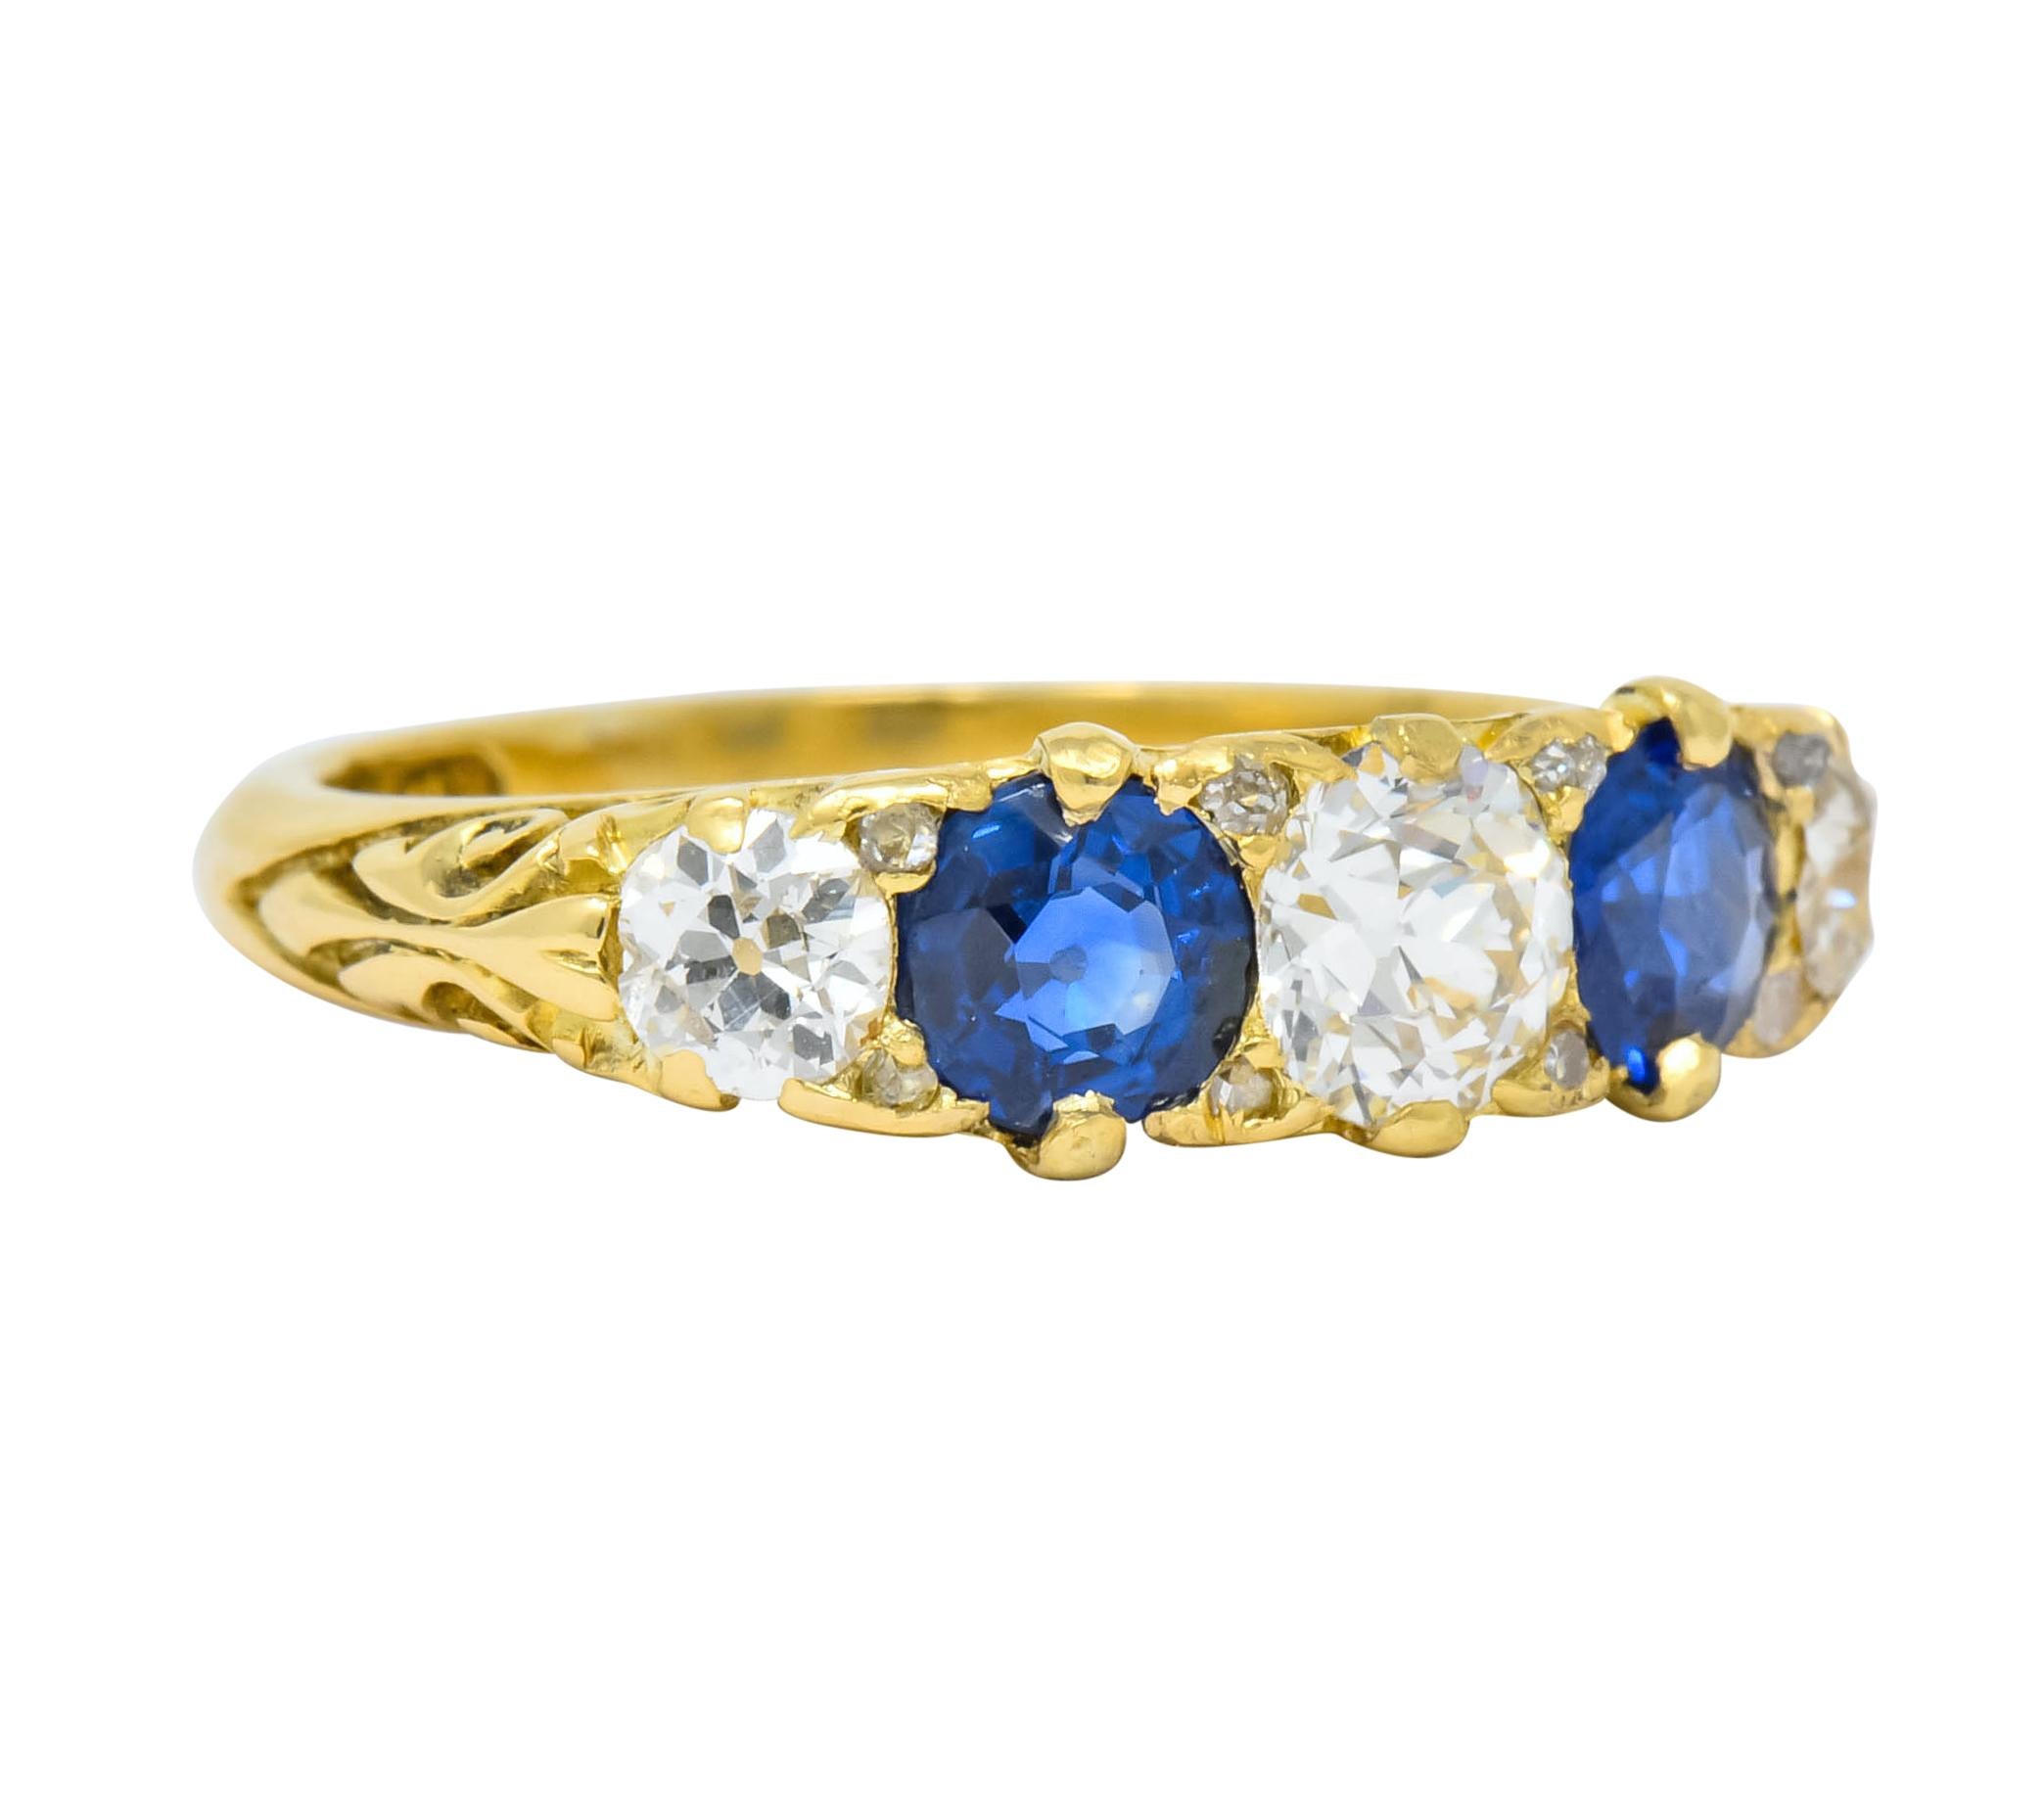 Old Mine Cut 1890 Victorian 2.45 Carat Diamond Sapphire 18 Karat Gold Scrolled Band Ring